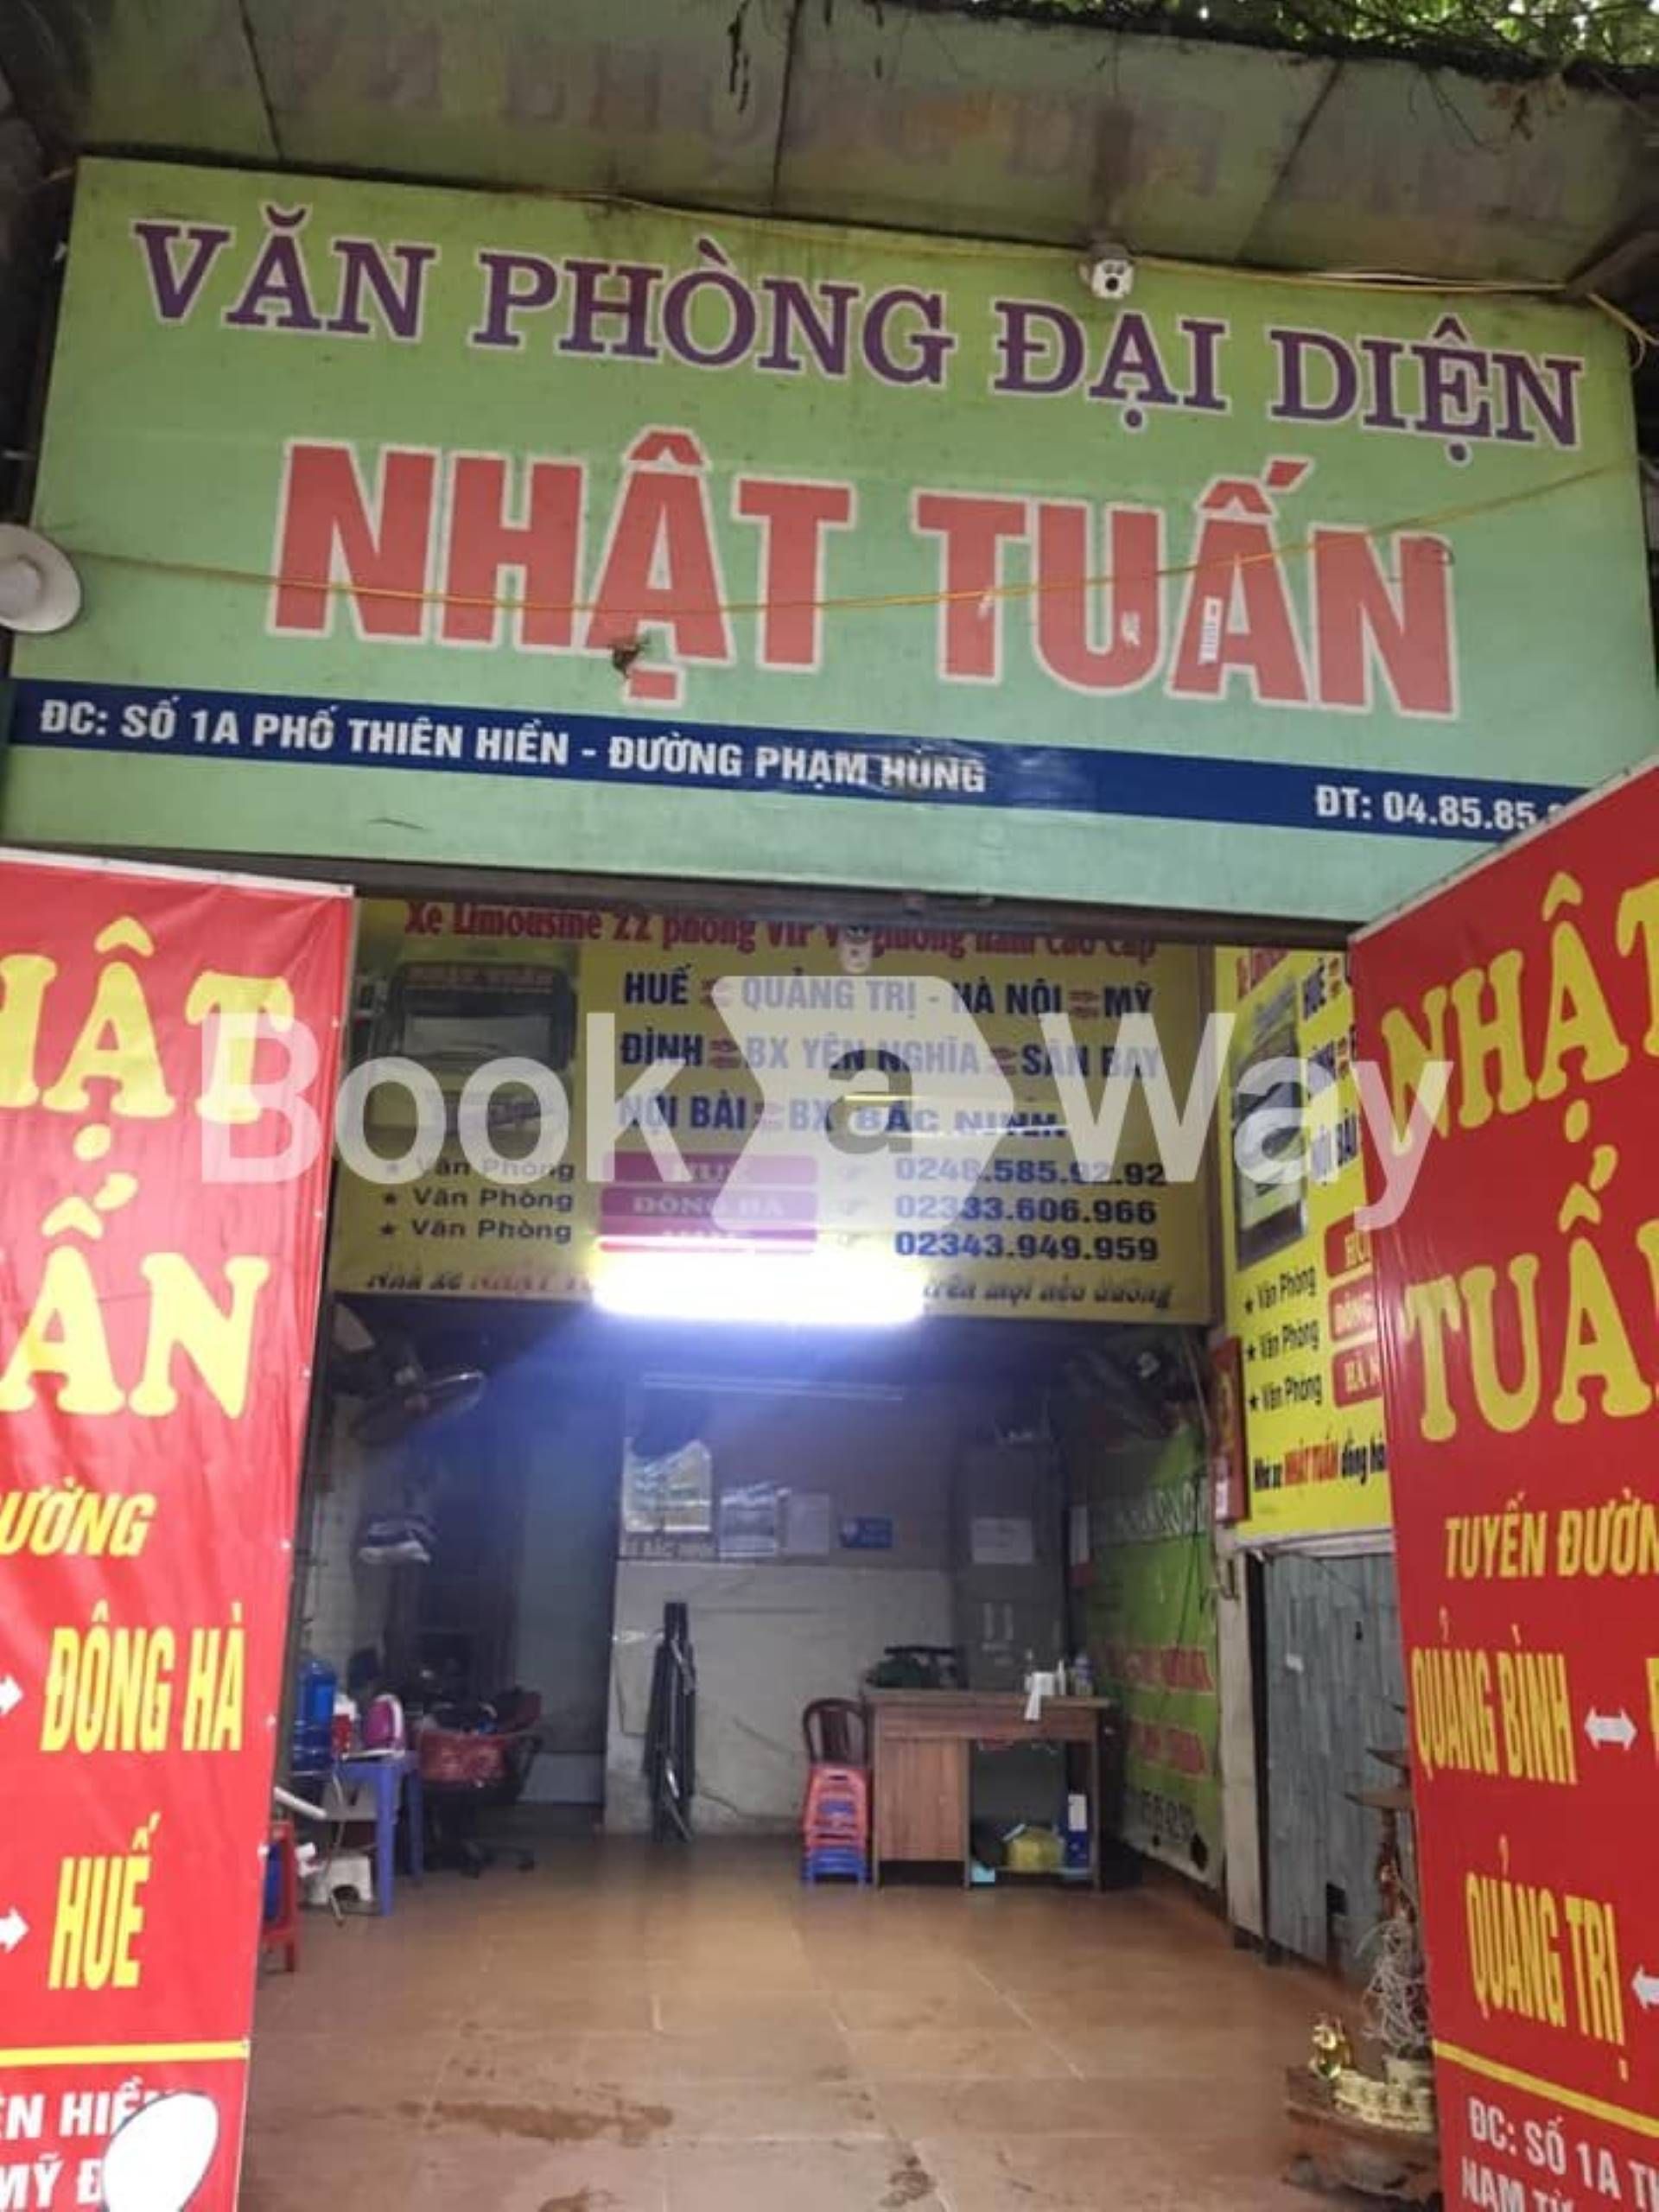 Nhat Tuan Hanoi Thien Hien office